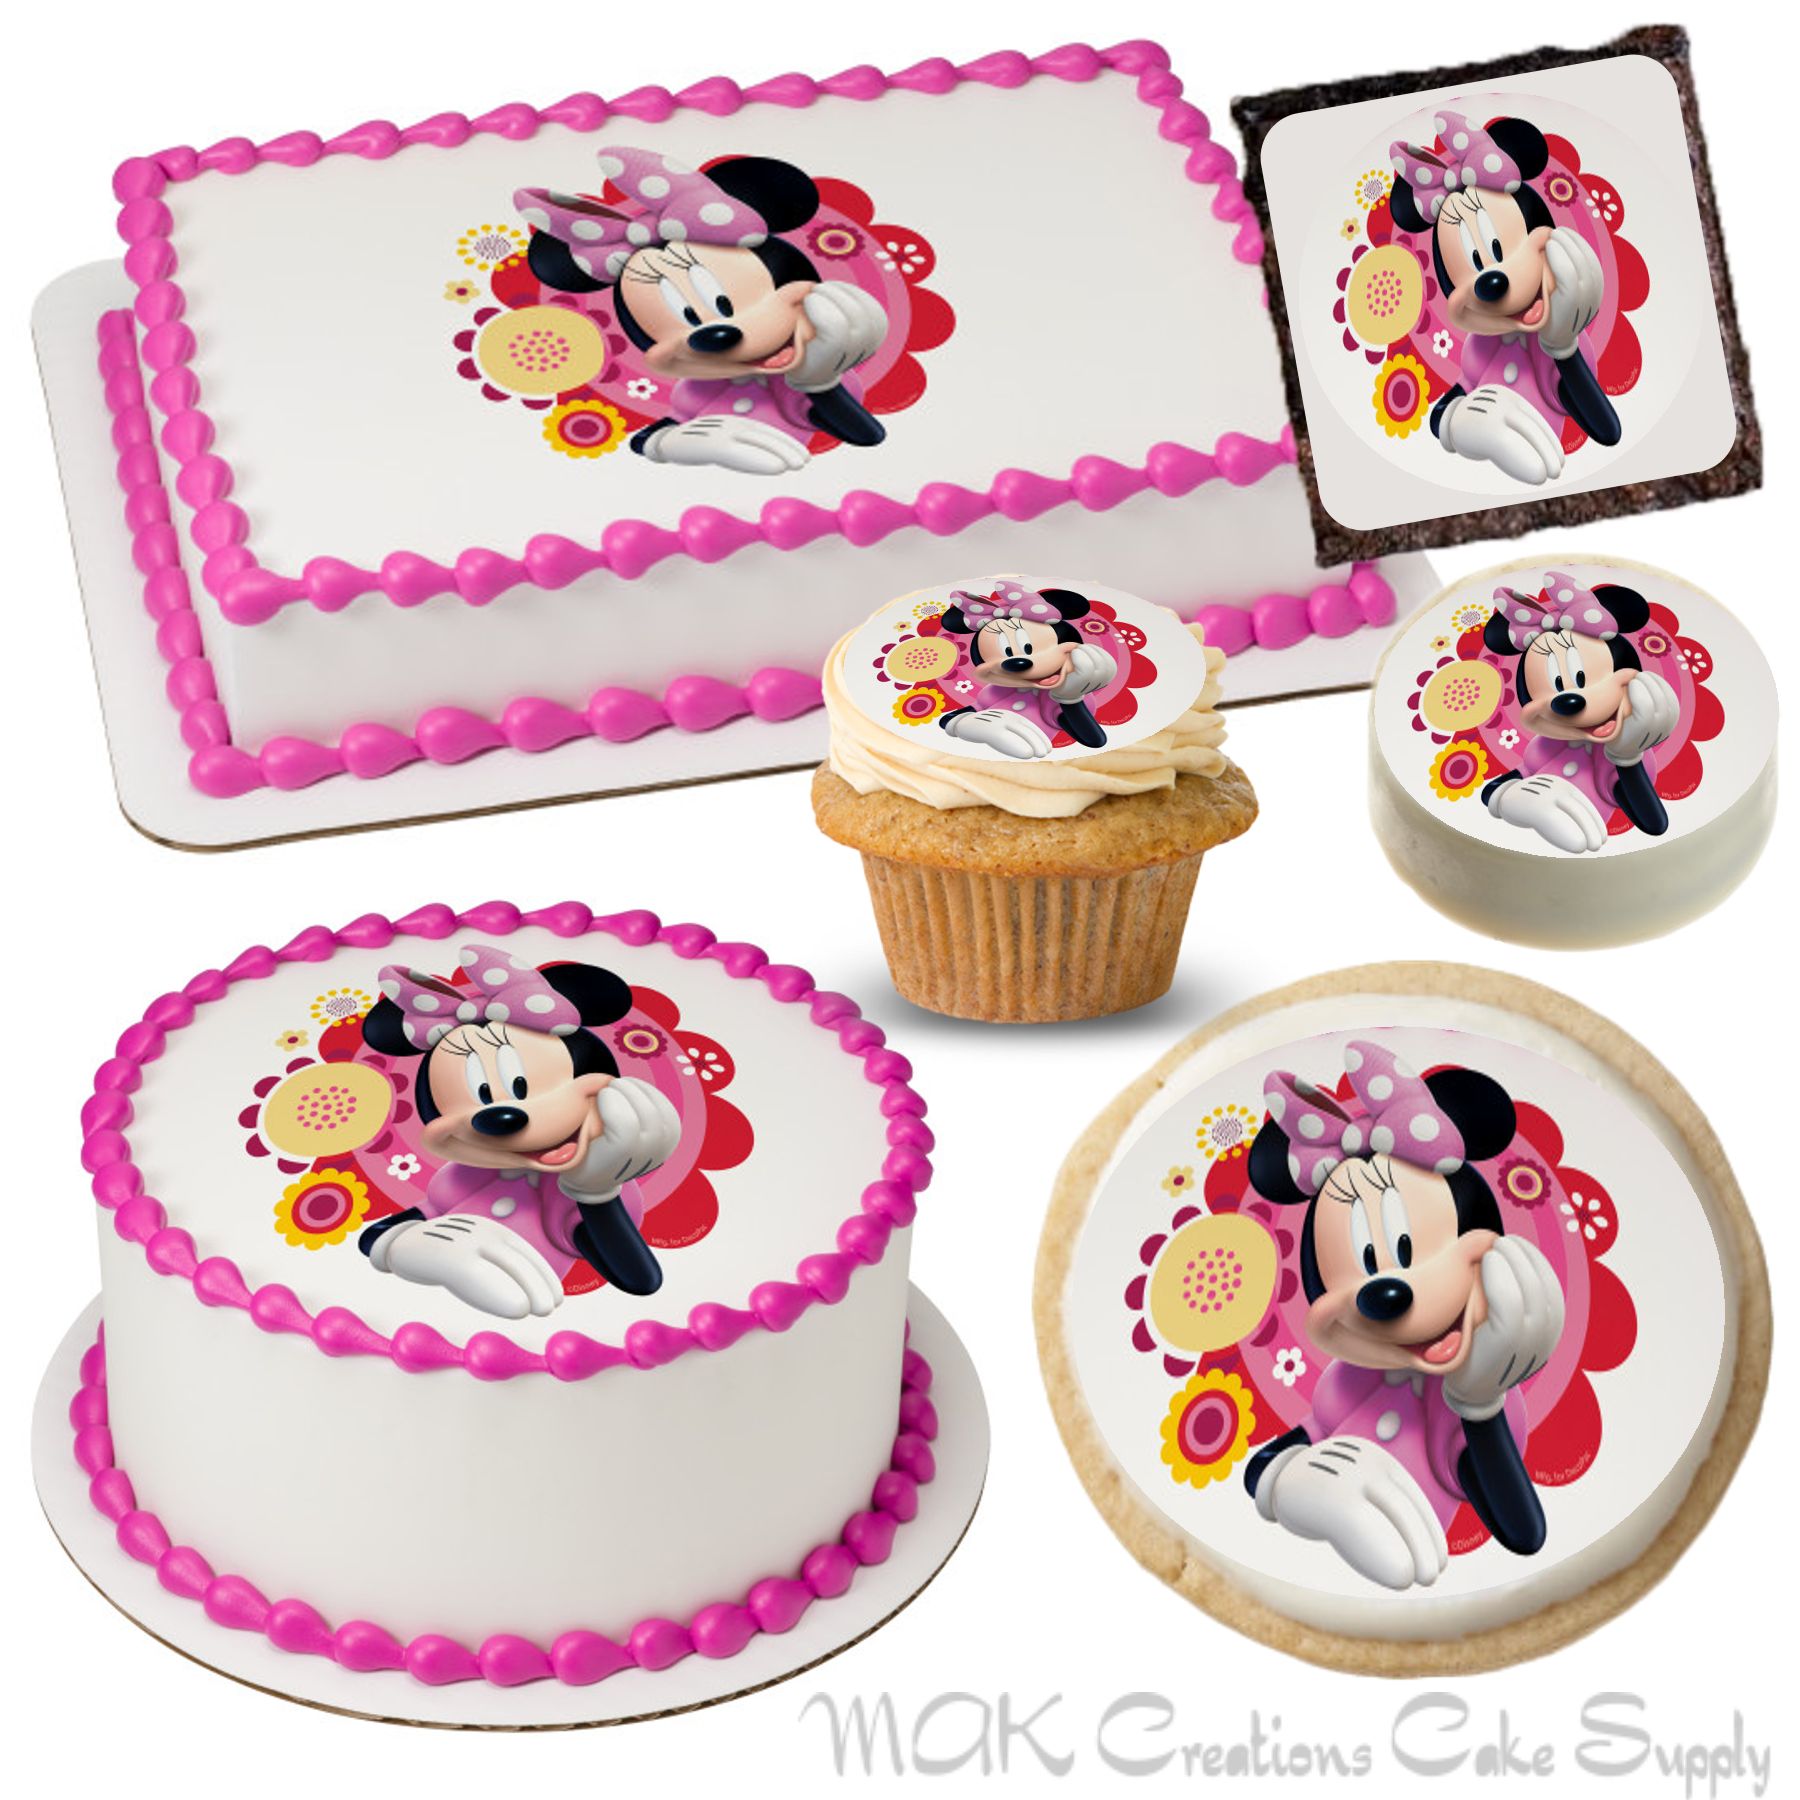 Disney Cookies - Minnie's Bake Shop Mini Birthday Cake